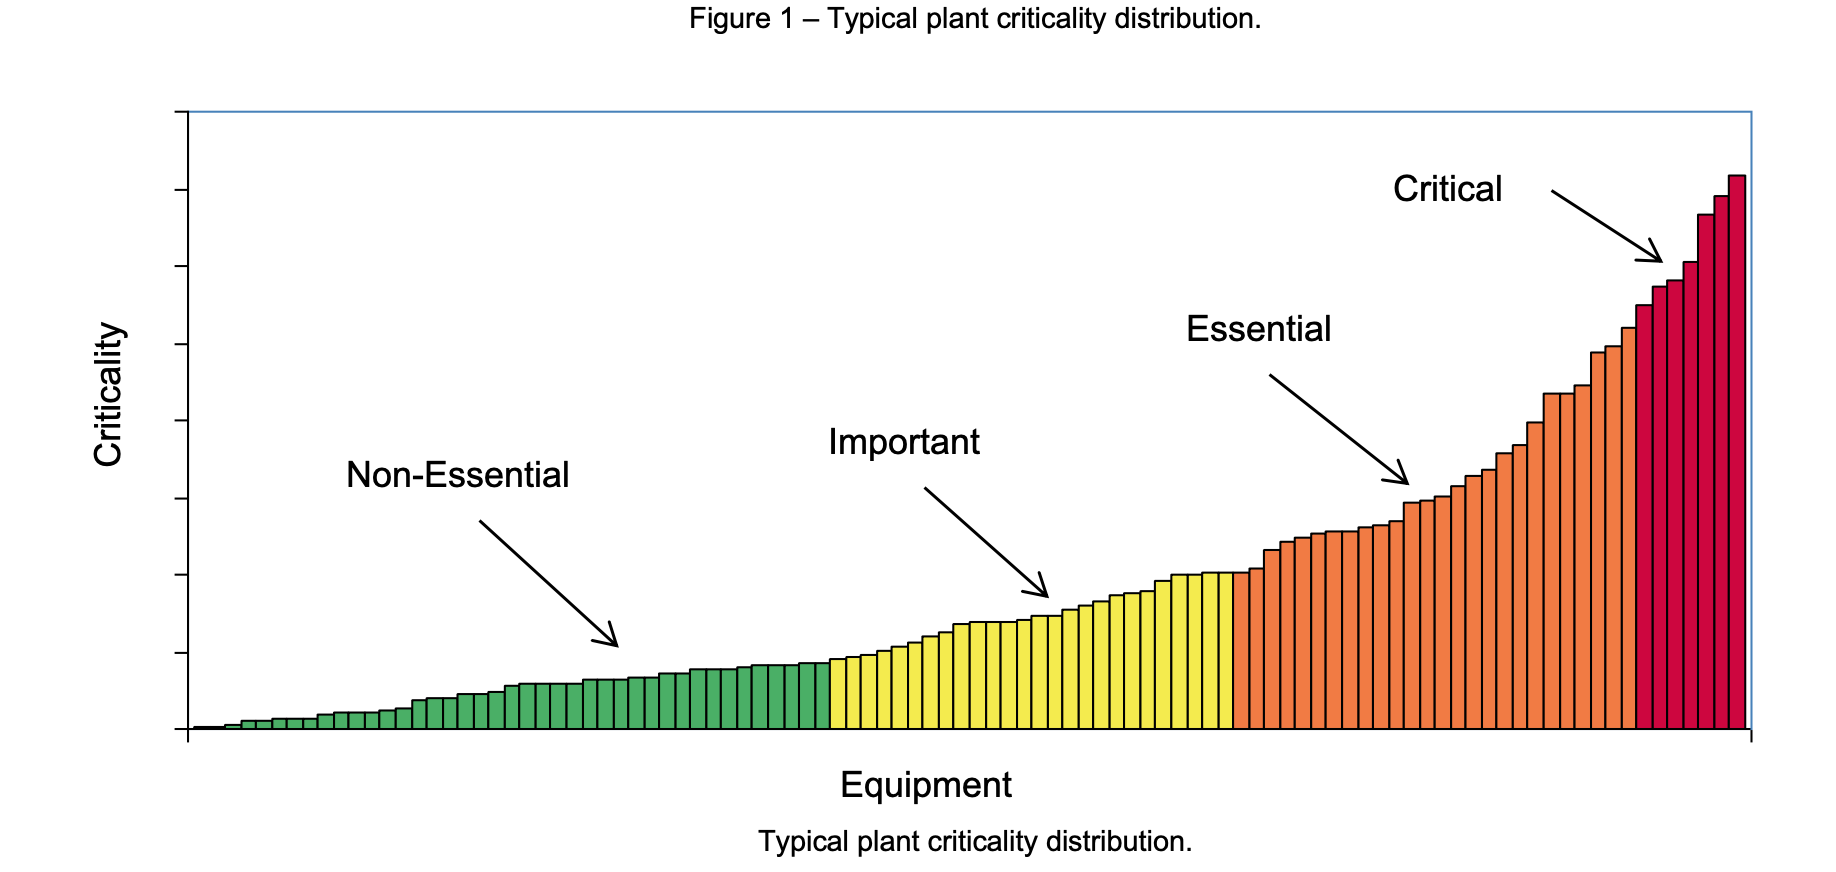 Regal-Beloit-Plant_Criticality-Chart